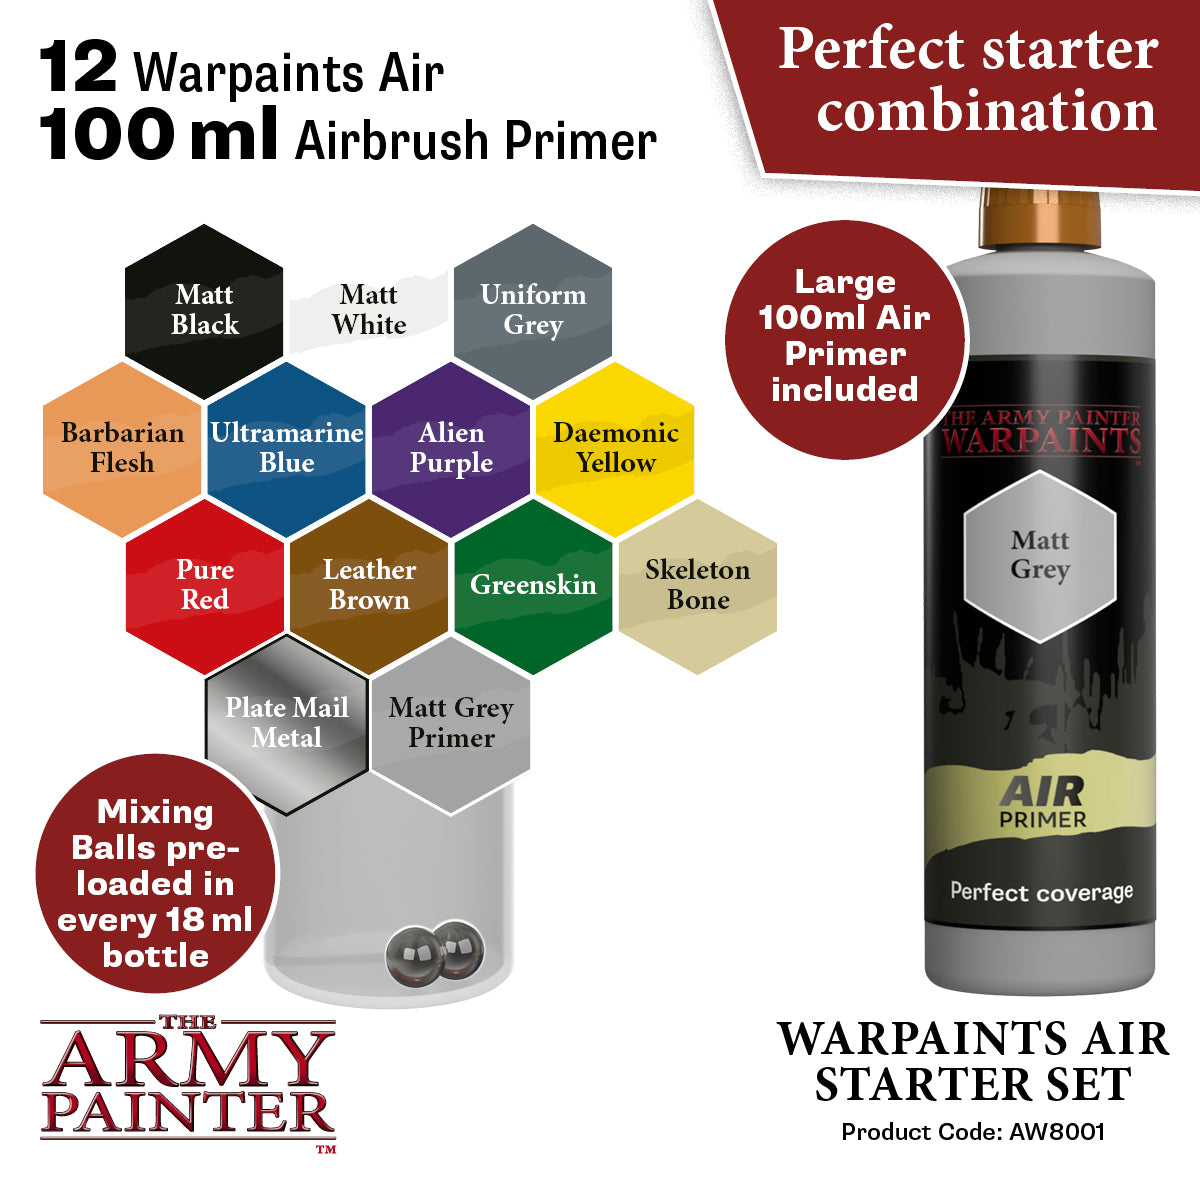 Warpaints Air: Matt Grey Primer, 100 ml